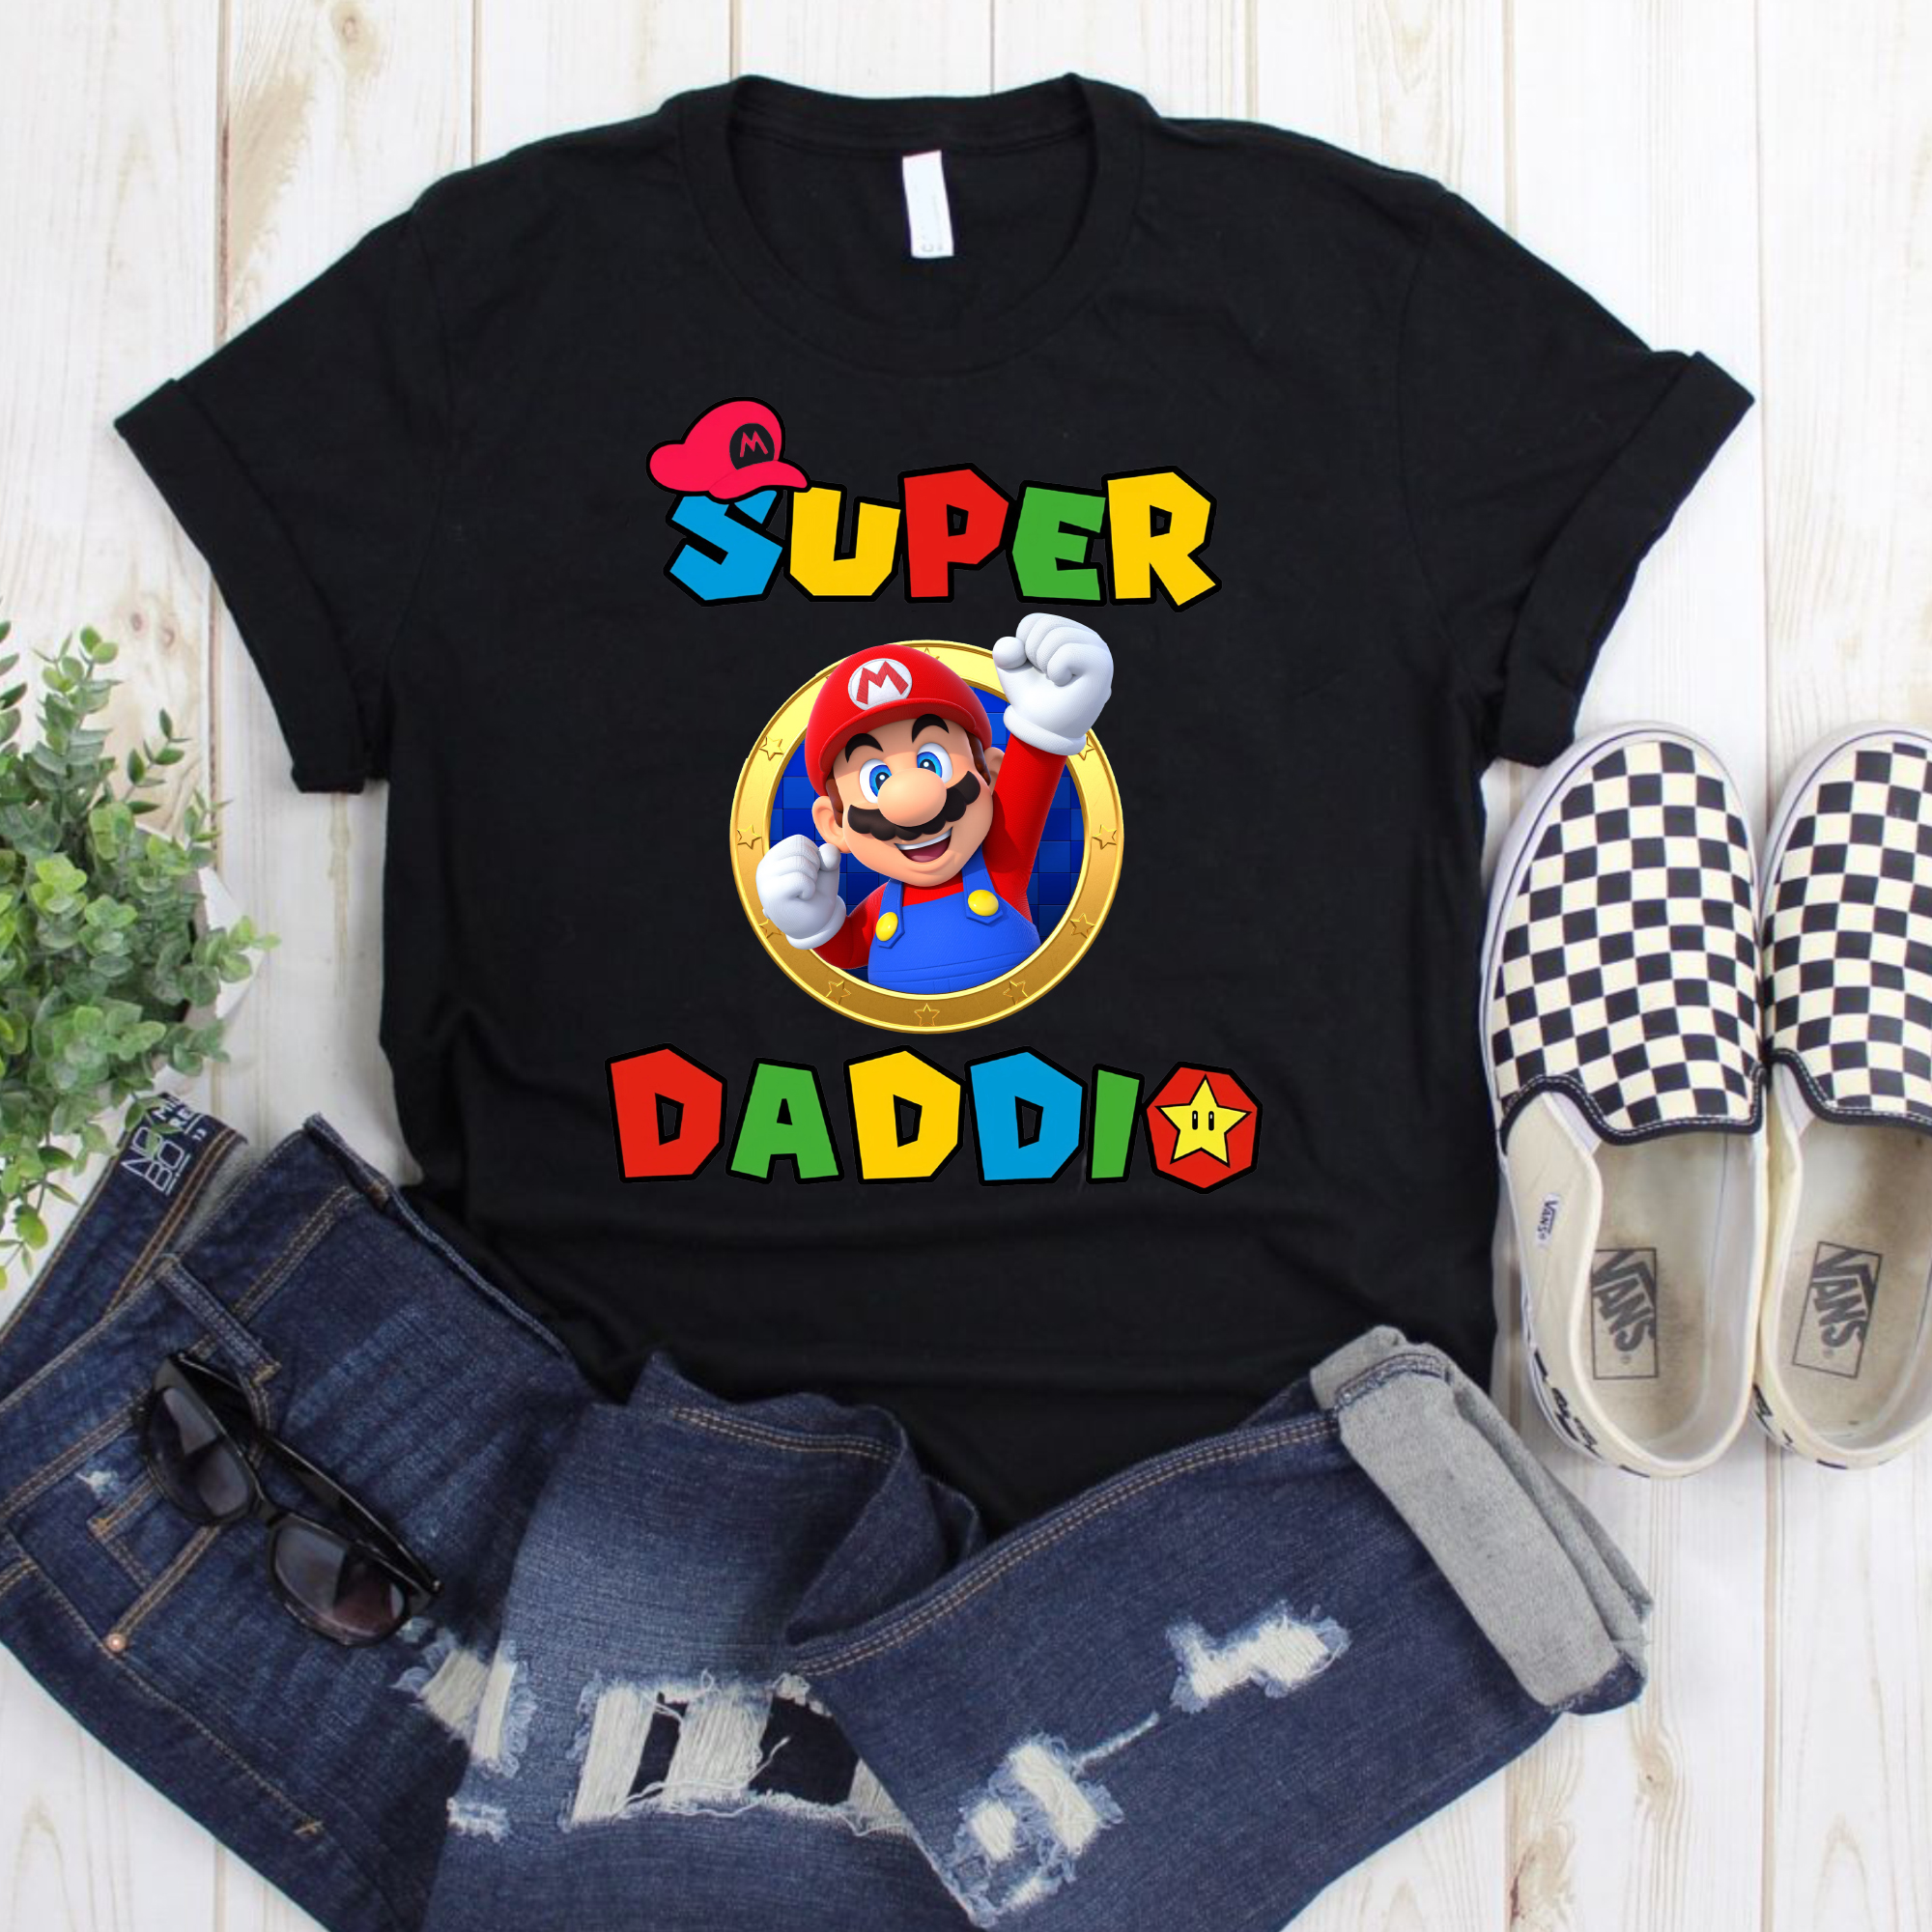 Super Daddio T-Shirt, Gamer Dad Shirt, Fathers Day